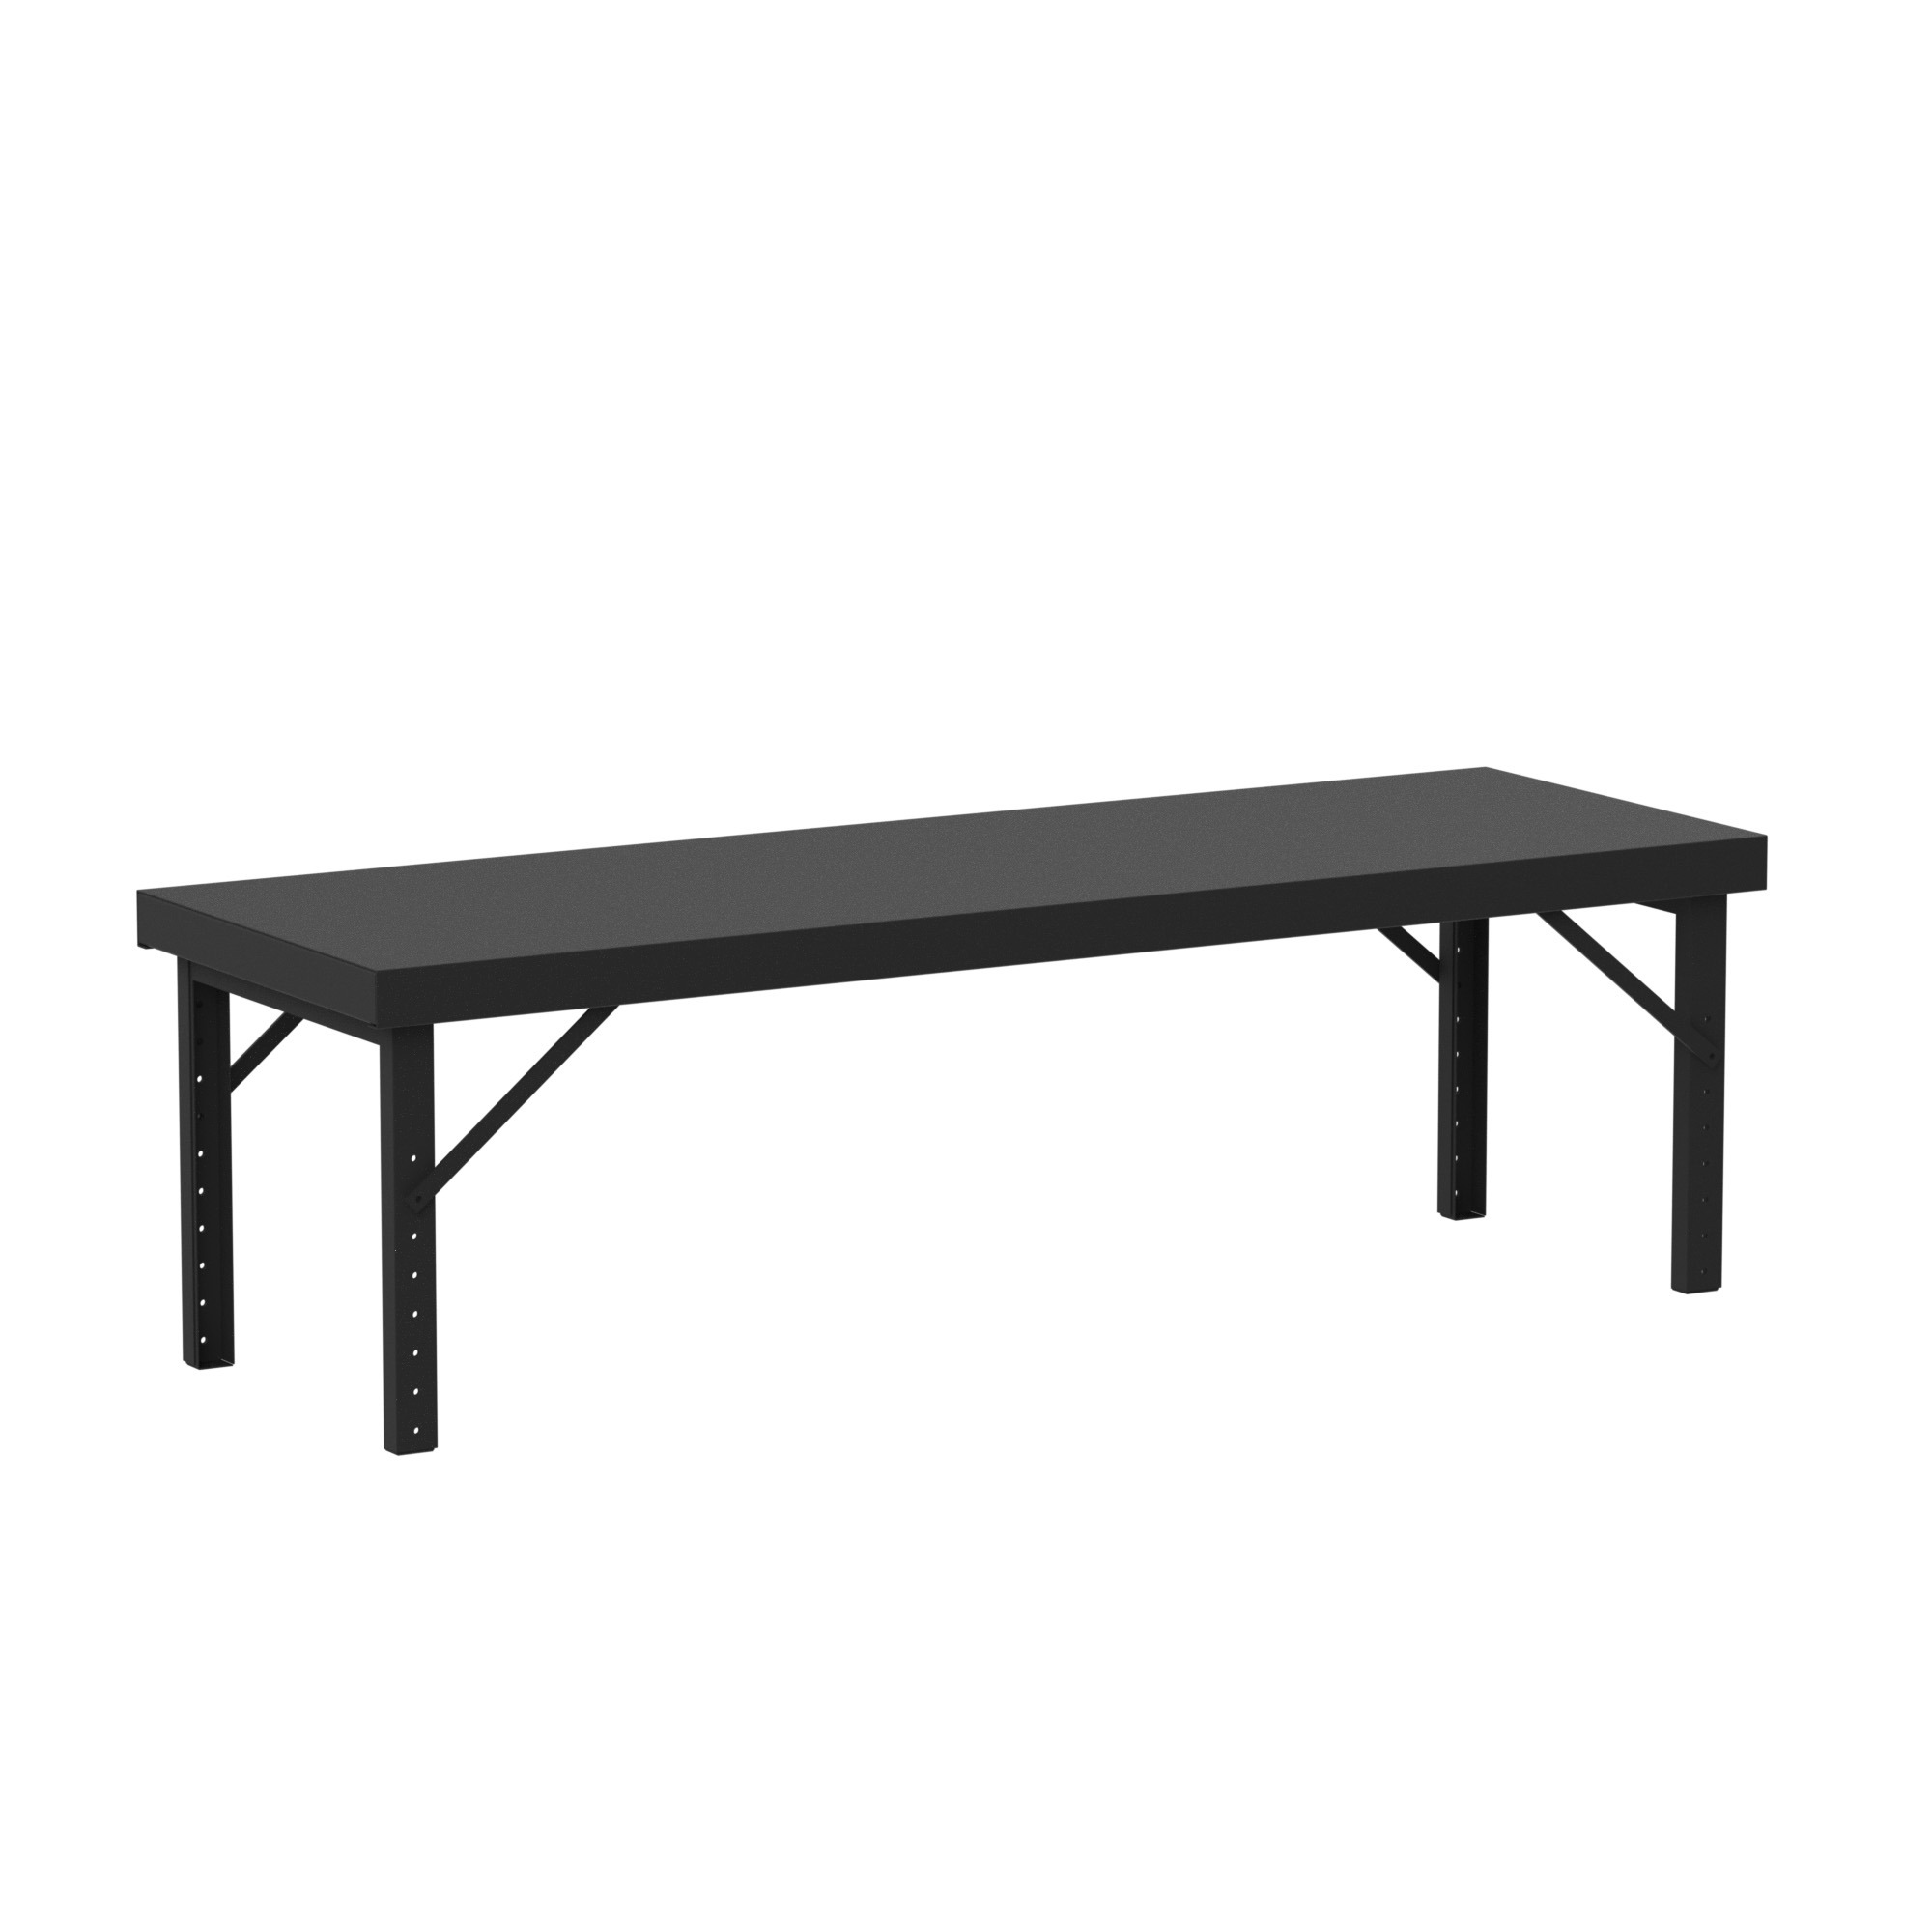 Adjustable Height Work Table, 120x48"